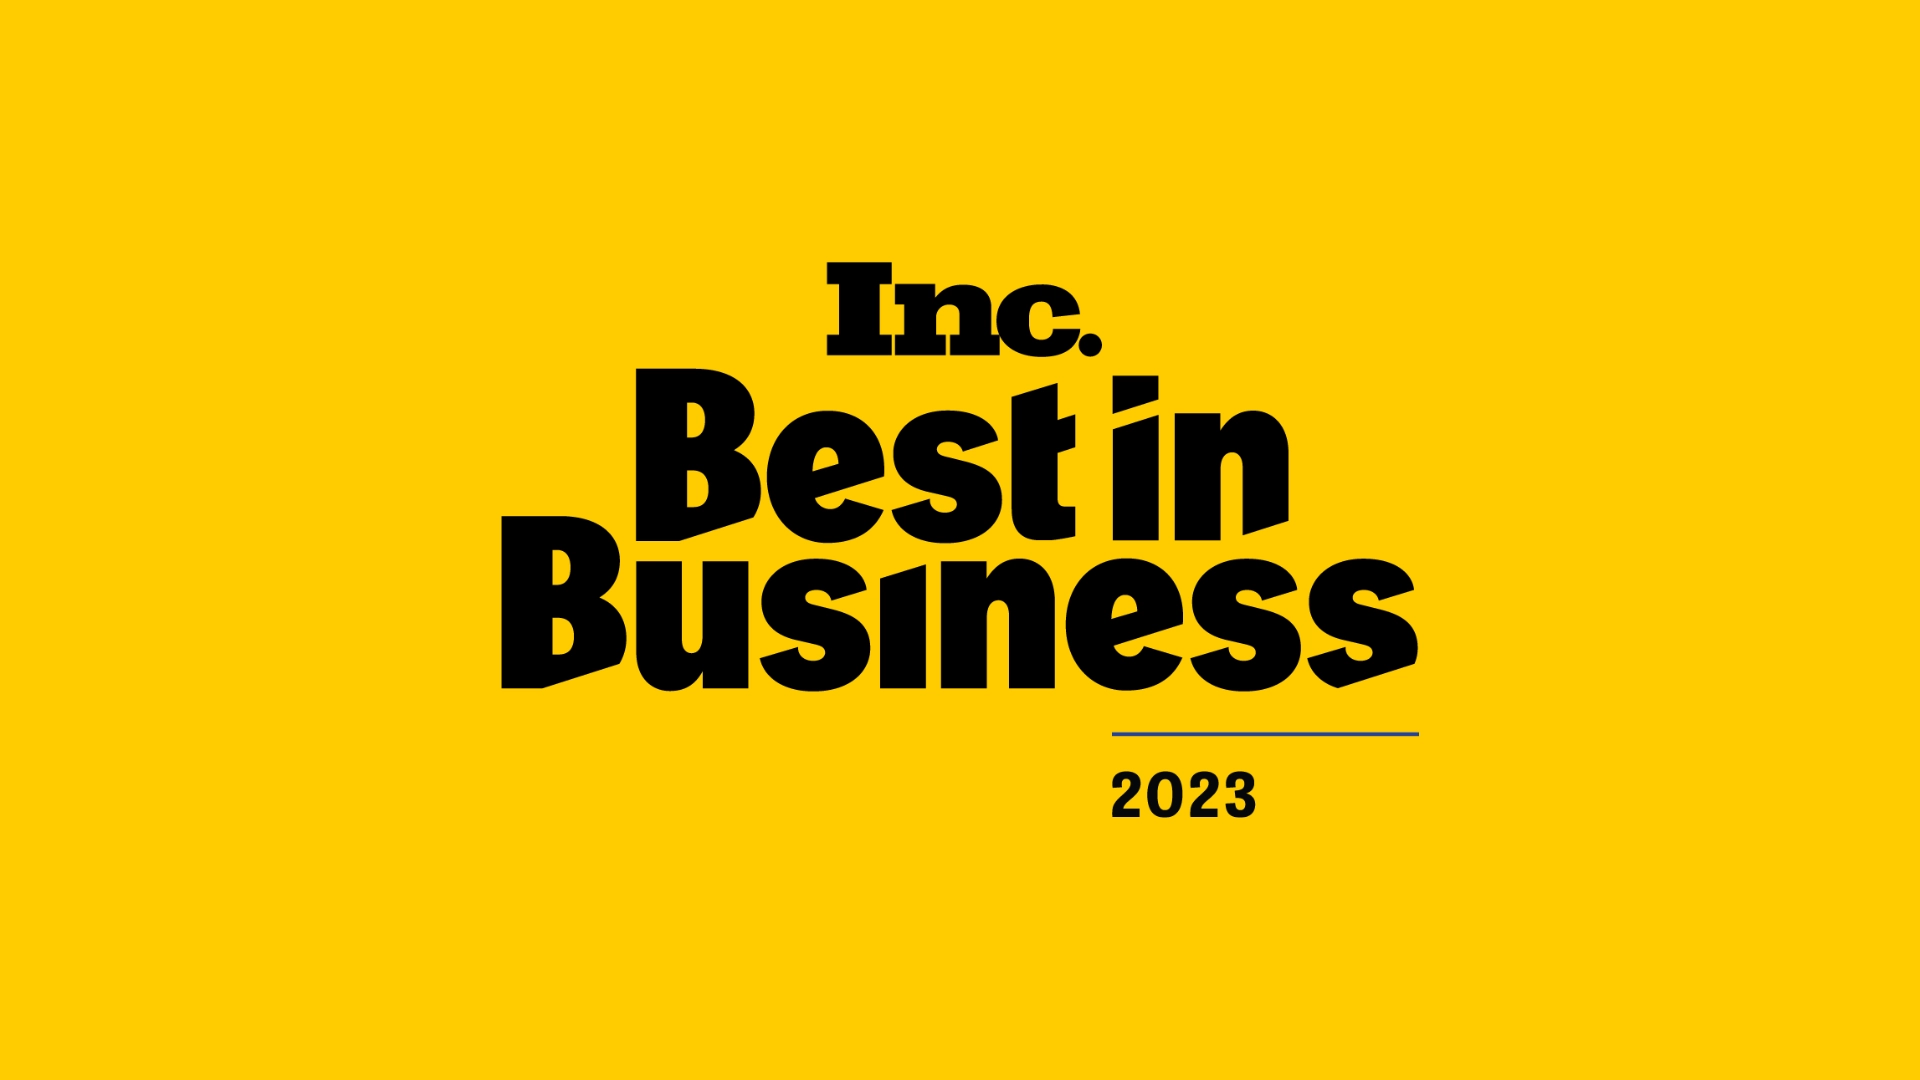 Clockwork named to Inc Best In Business 2023